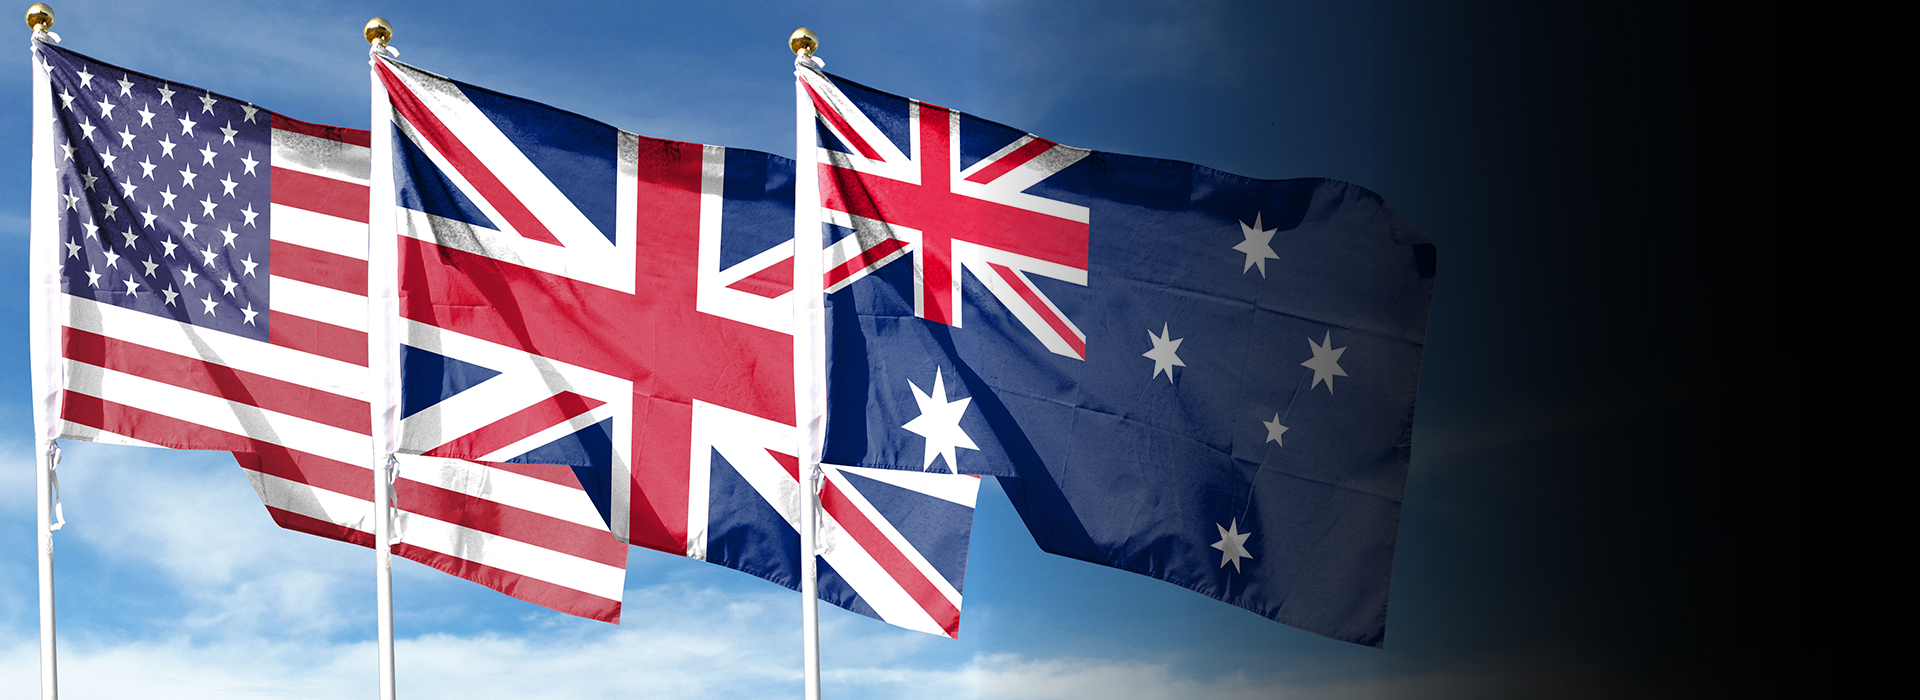 US, UK and Australian flags flying against blue sky